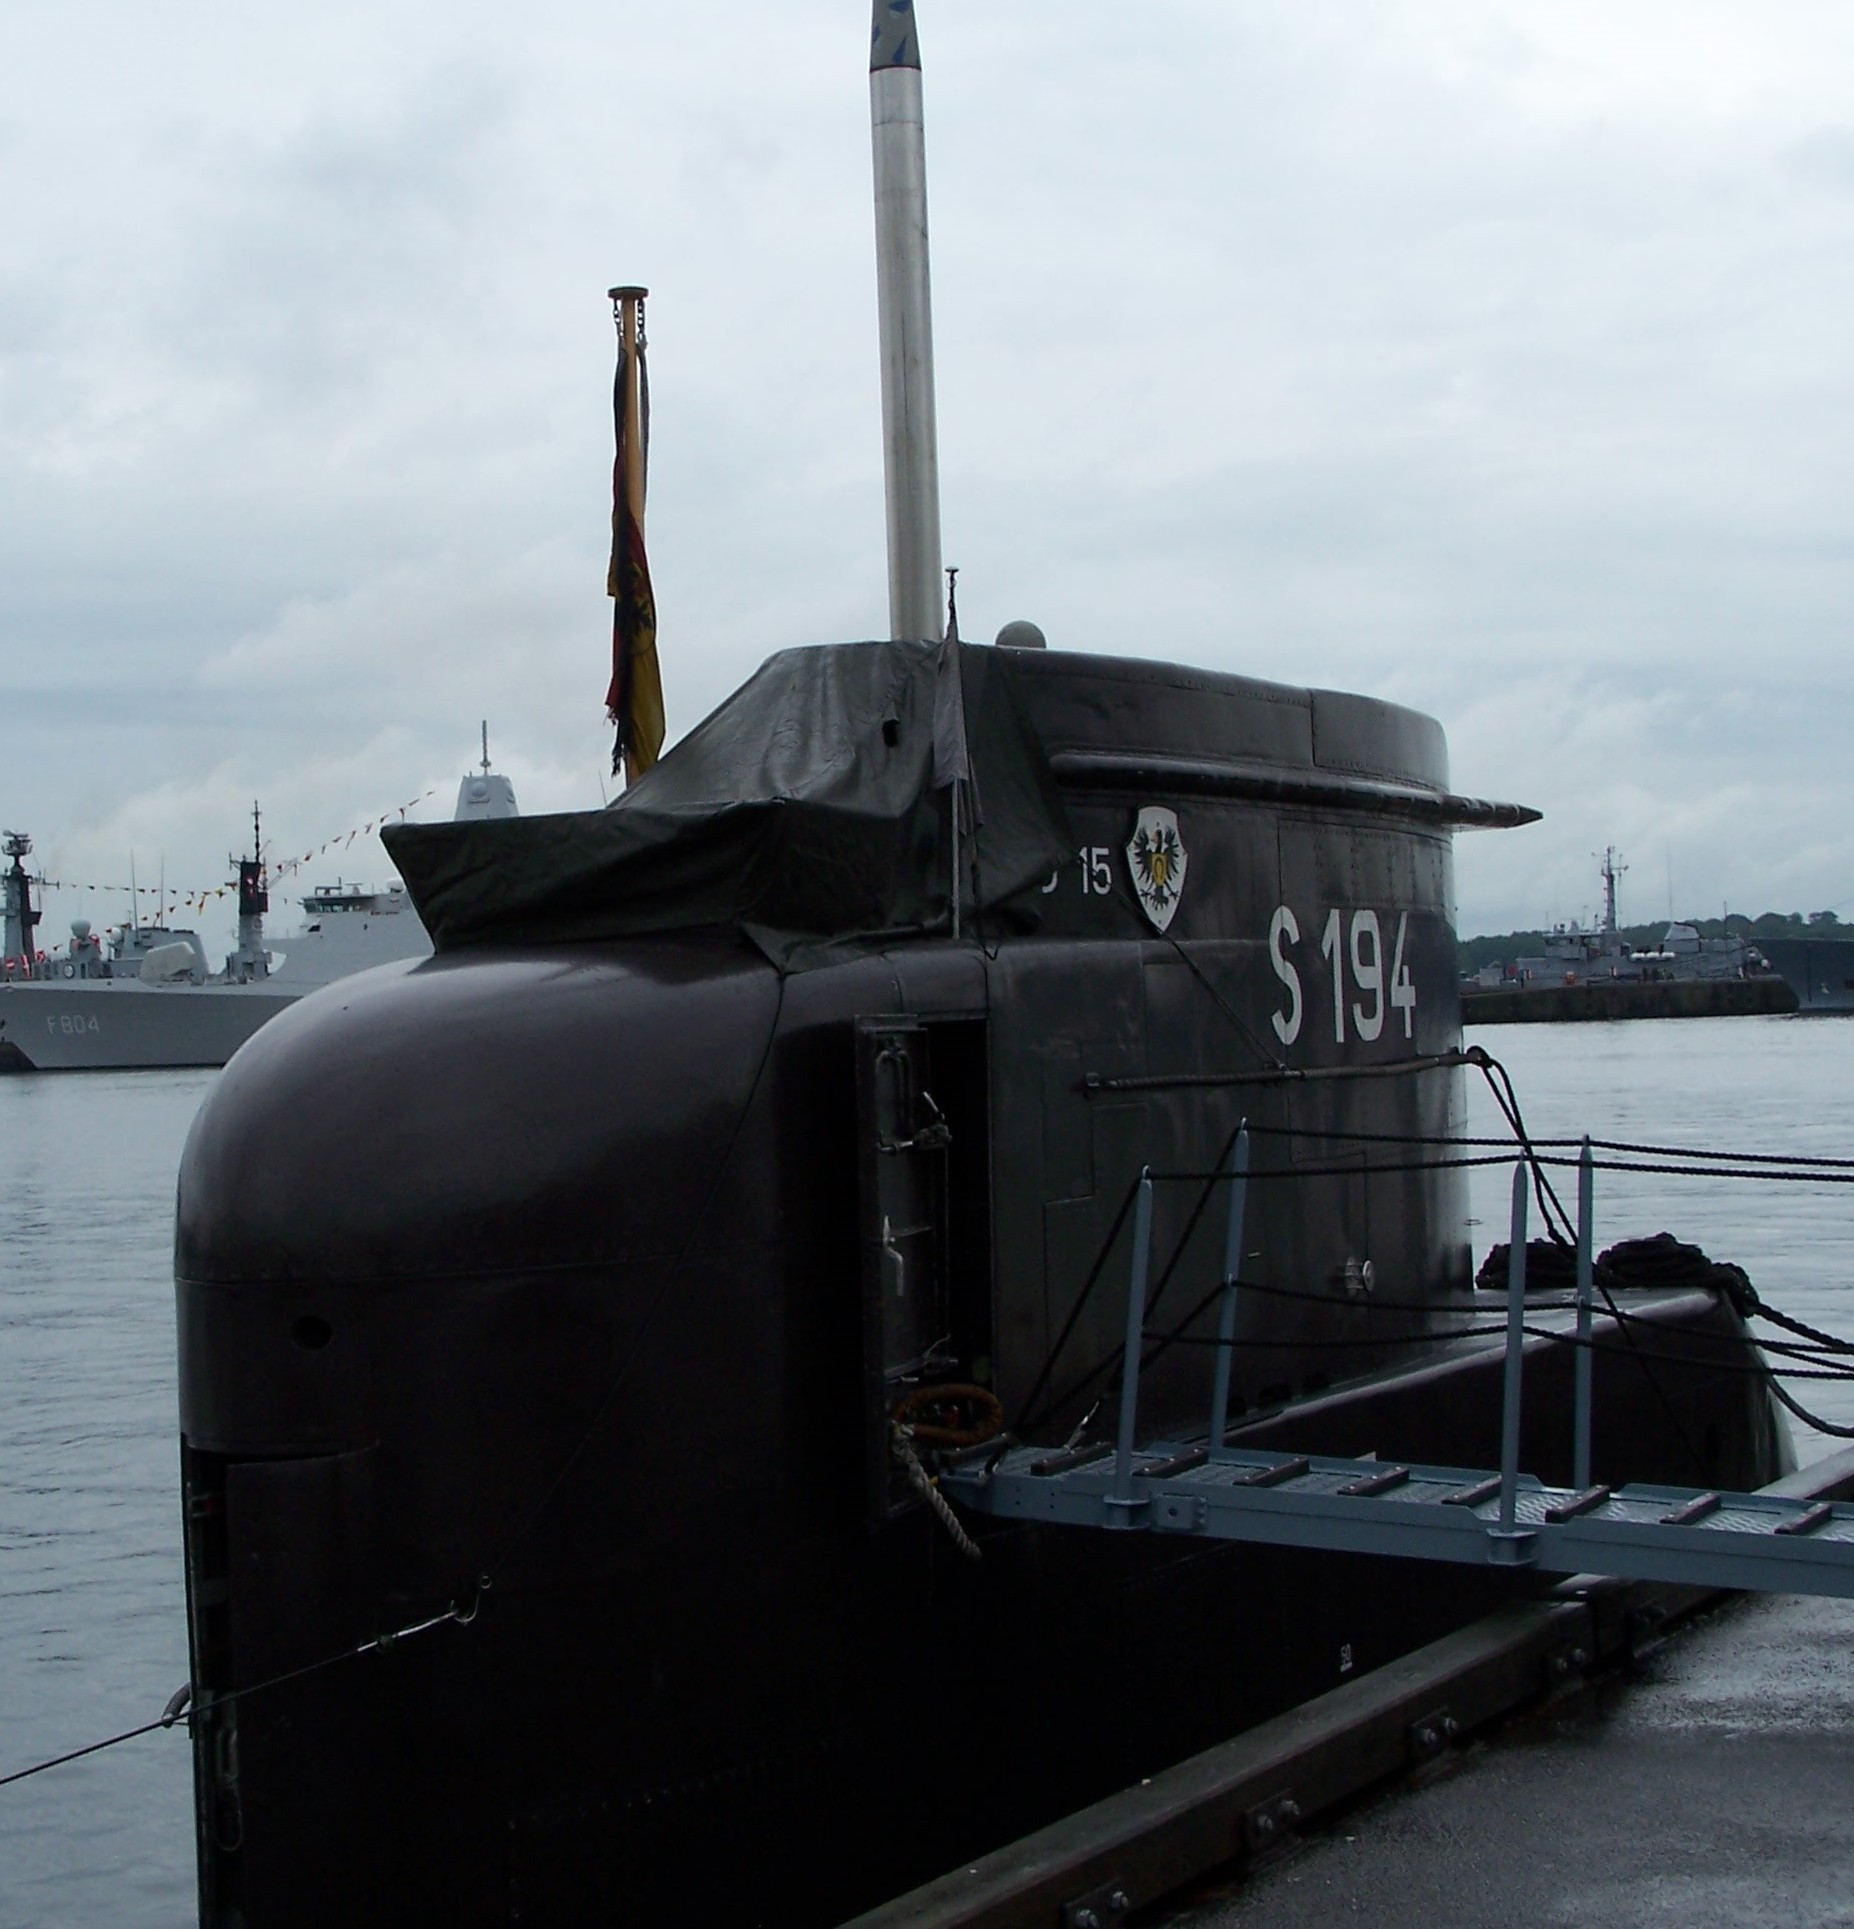 s-194 fgs u15 type 206 class submarine german navy 04